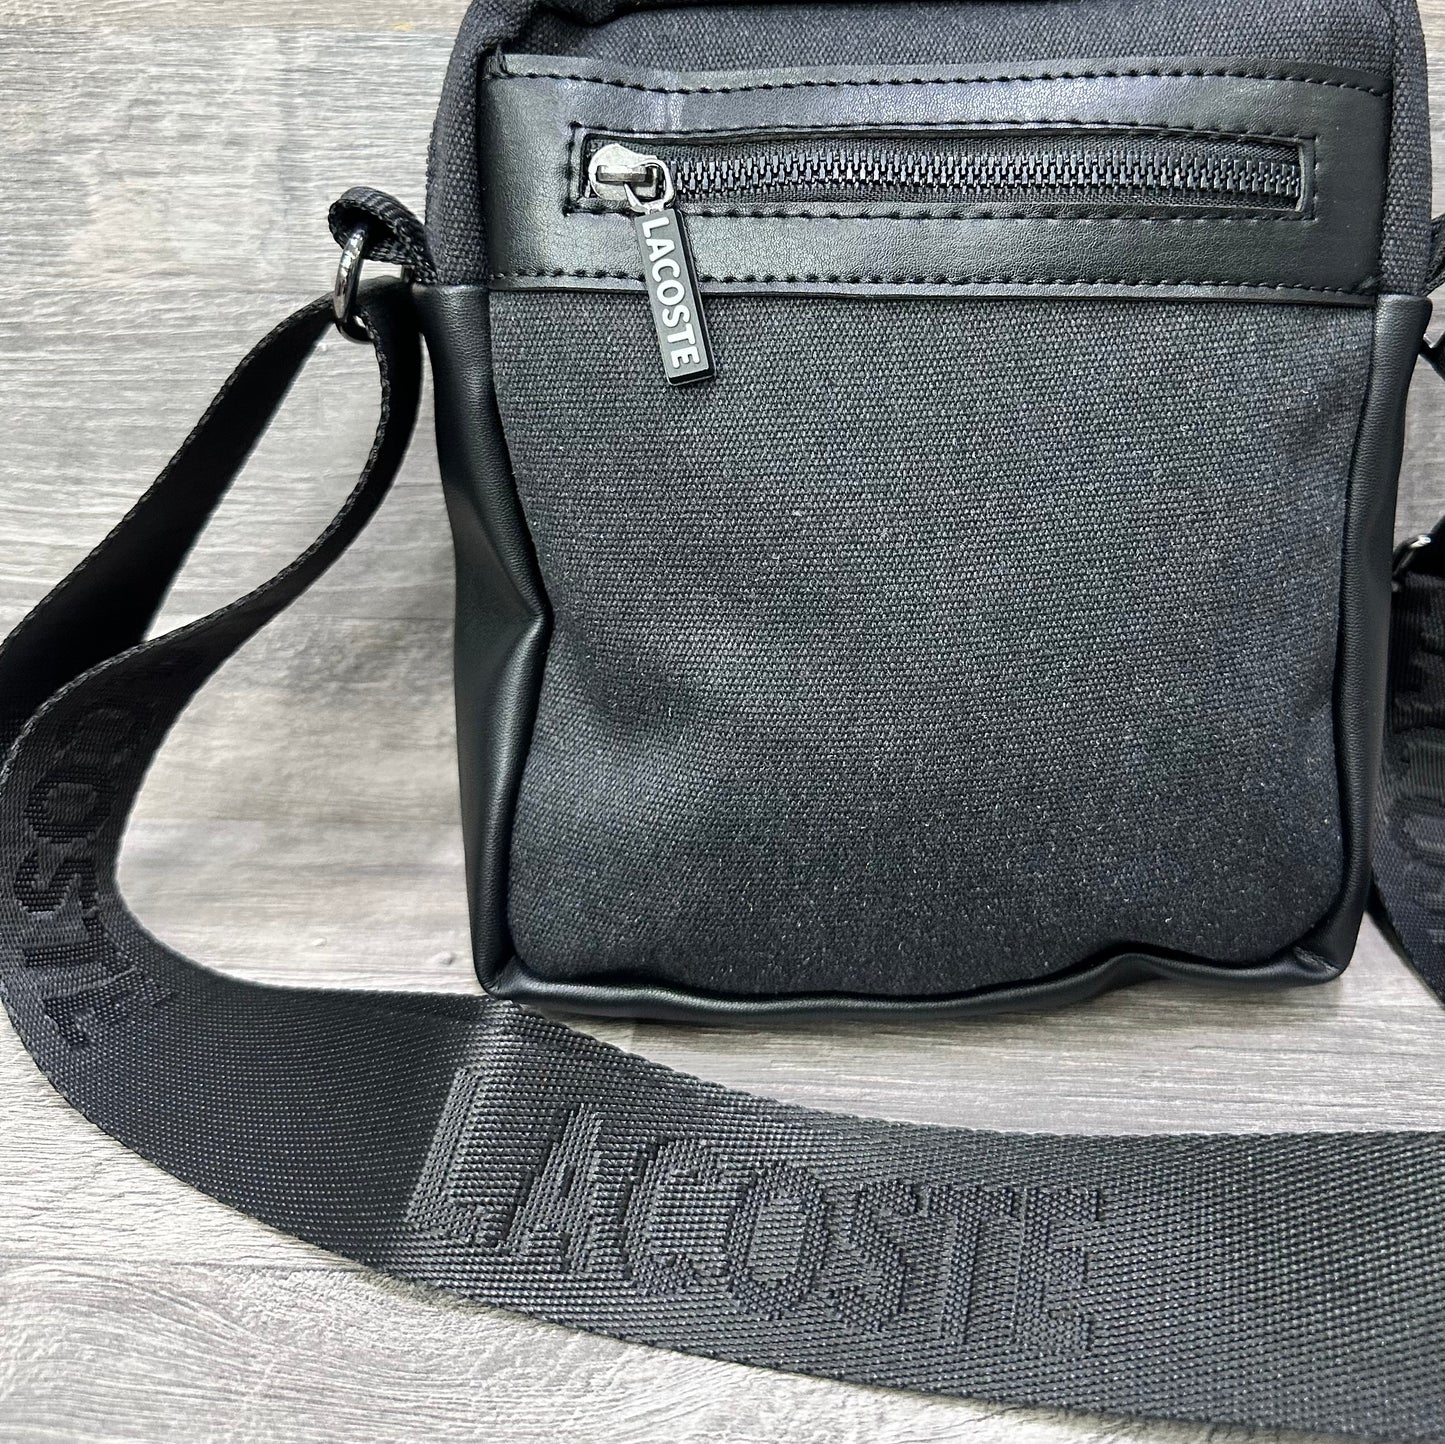 Lacoste Classic Black 07 mens bags